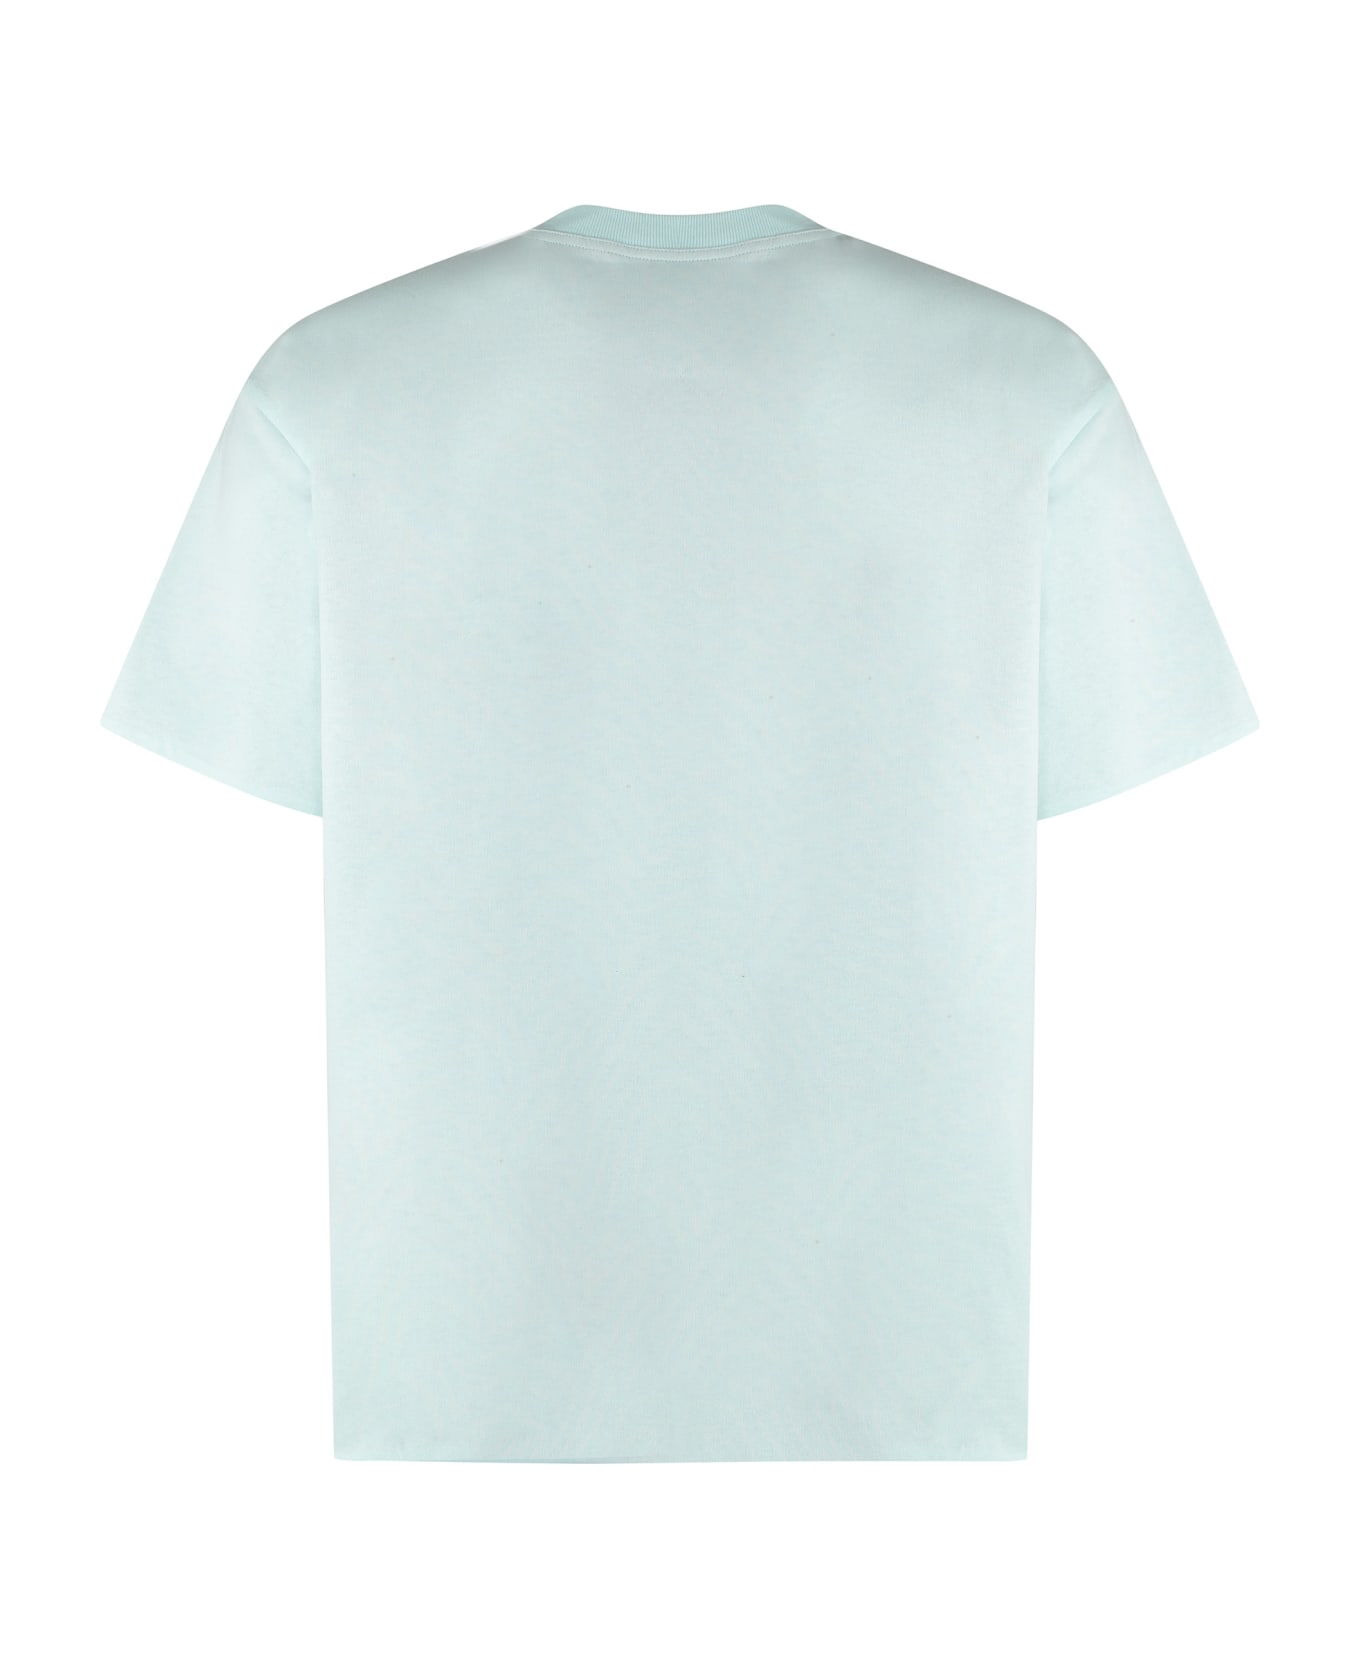 Bottega Veneta Cotton Crew-neck T-shirt - Pale turquoise navy